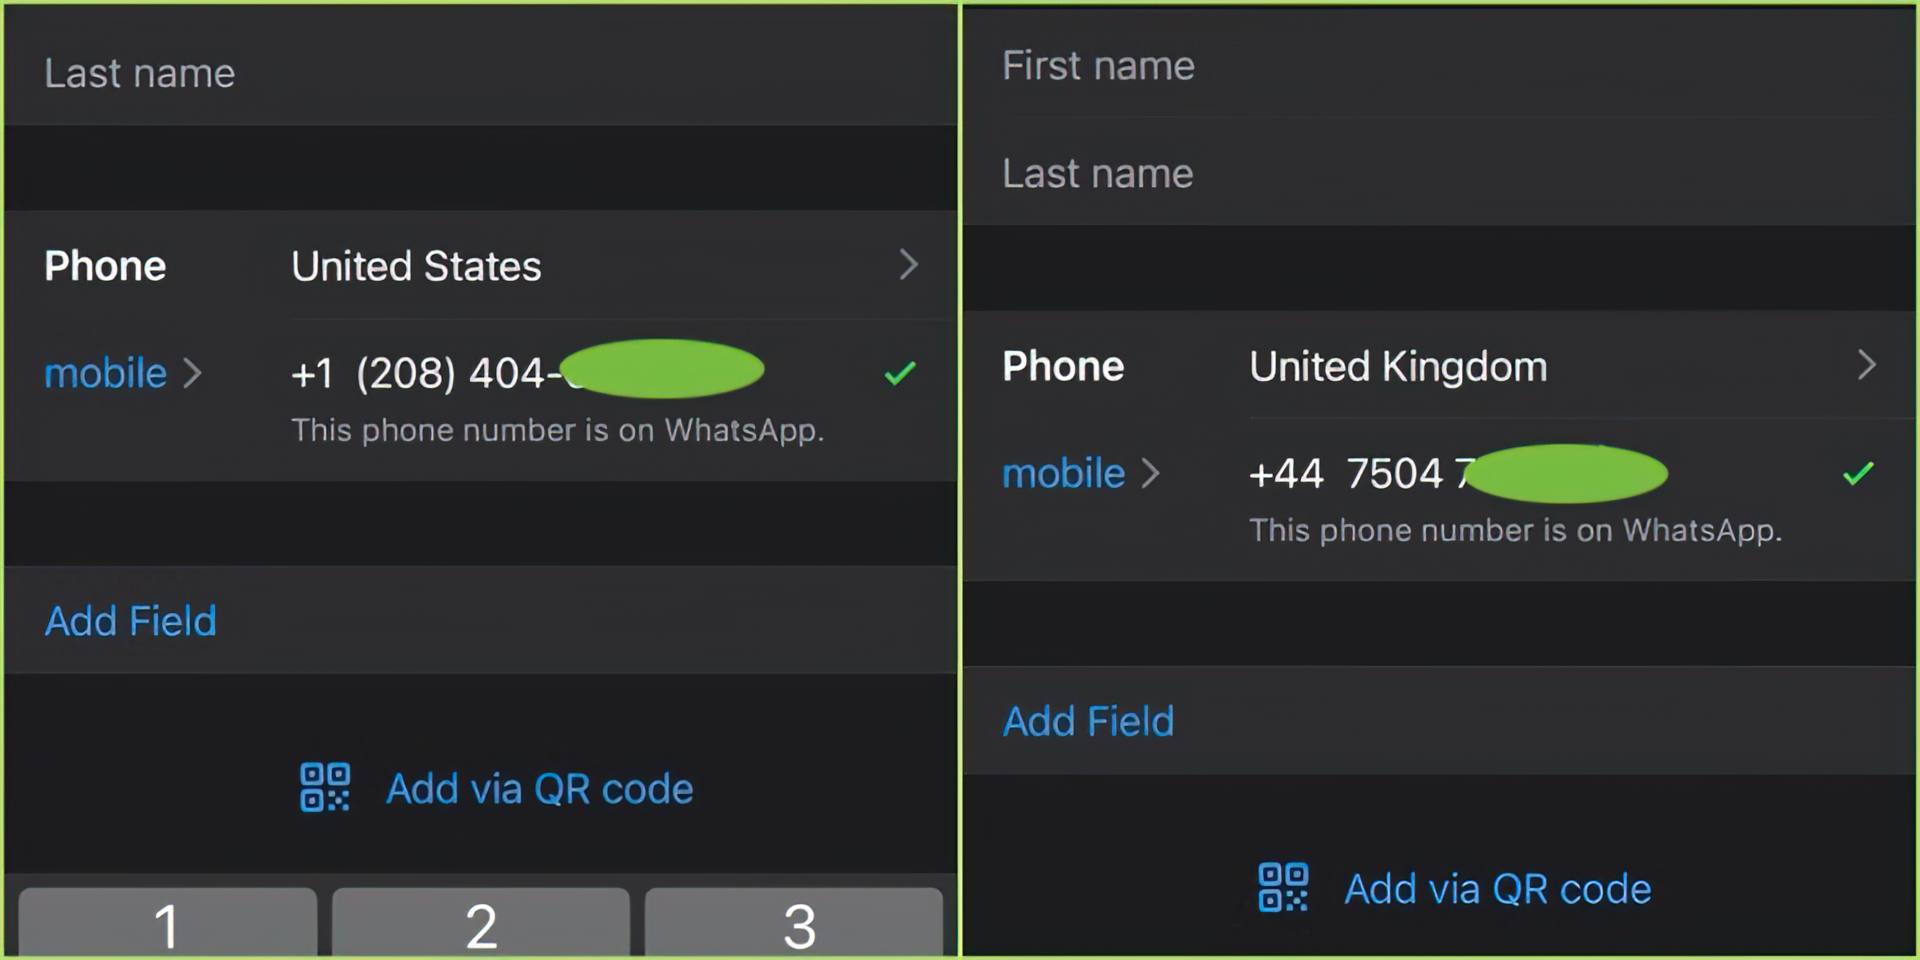 Dark web WhatsApp data leak 500 million users affected